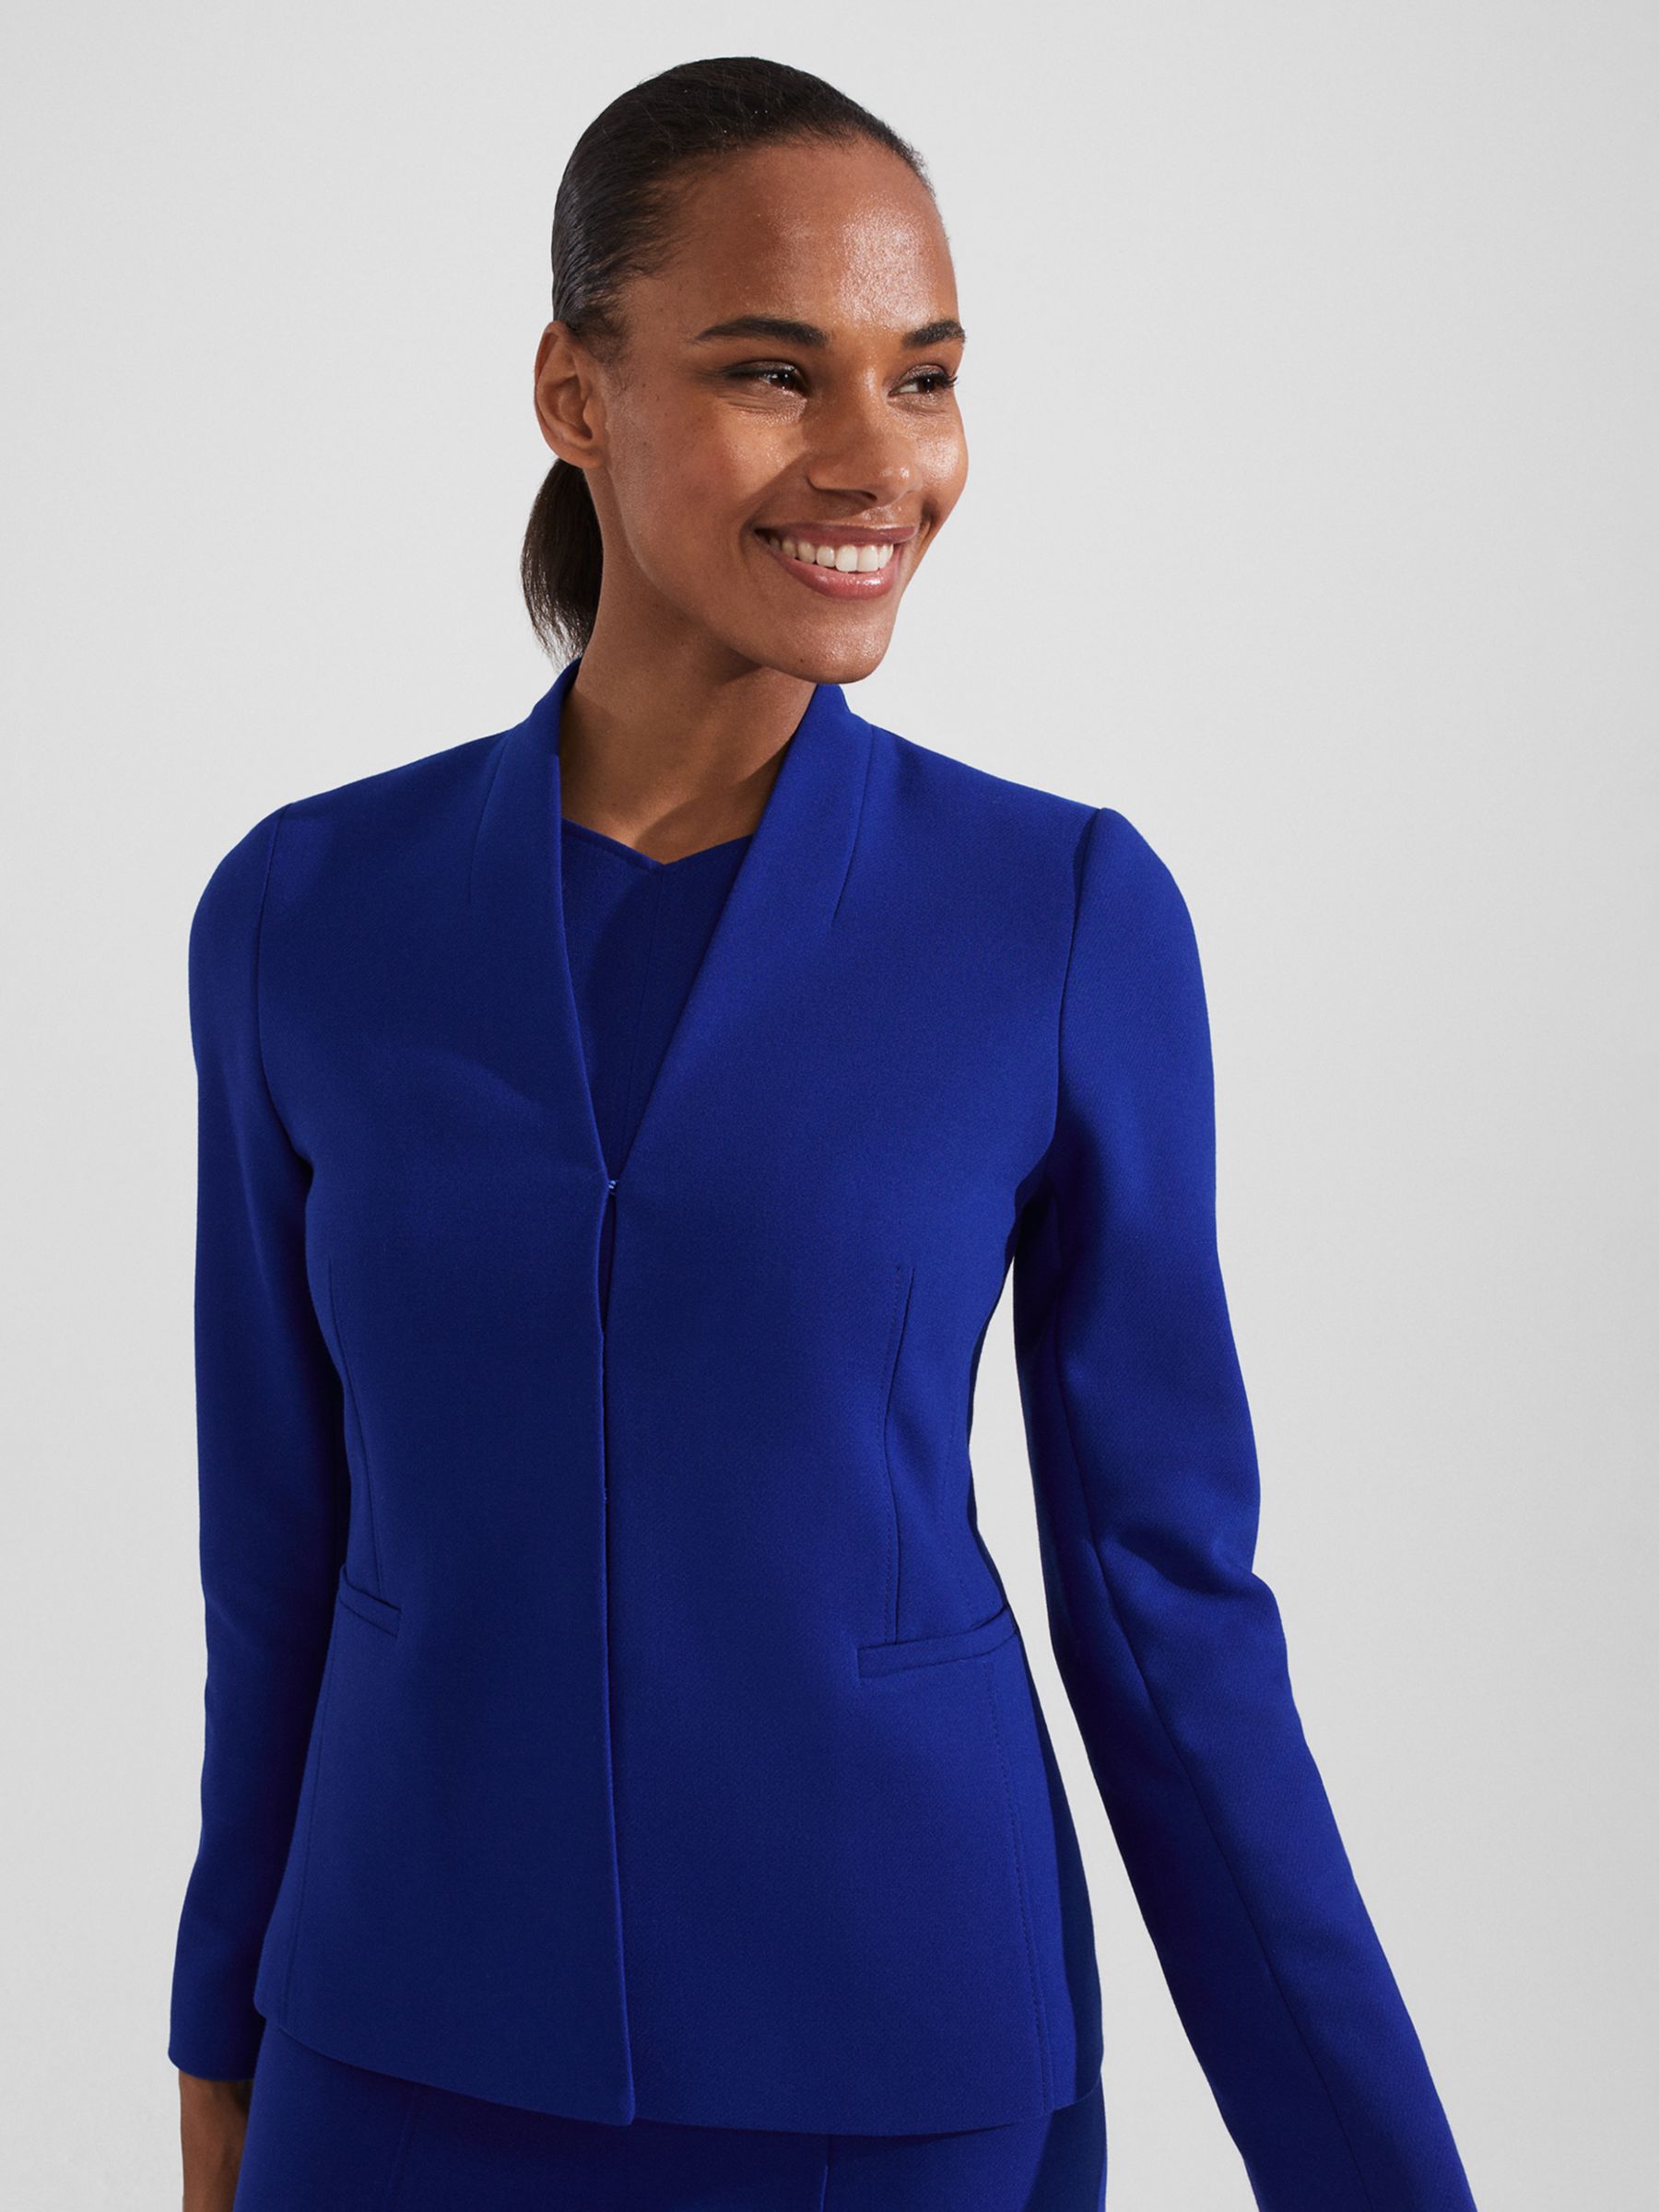 Royal Blue Slim Fit Blazer Suit For Women Sexy V Neck Formal